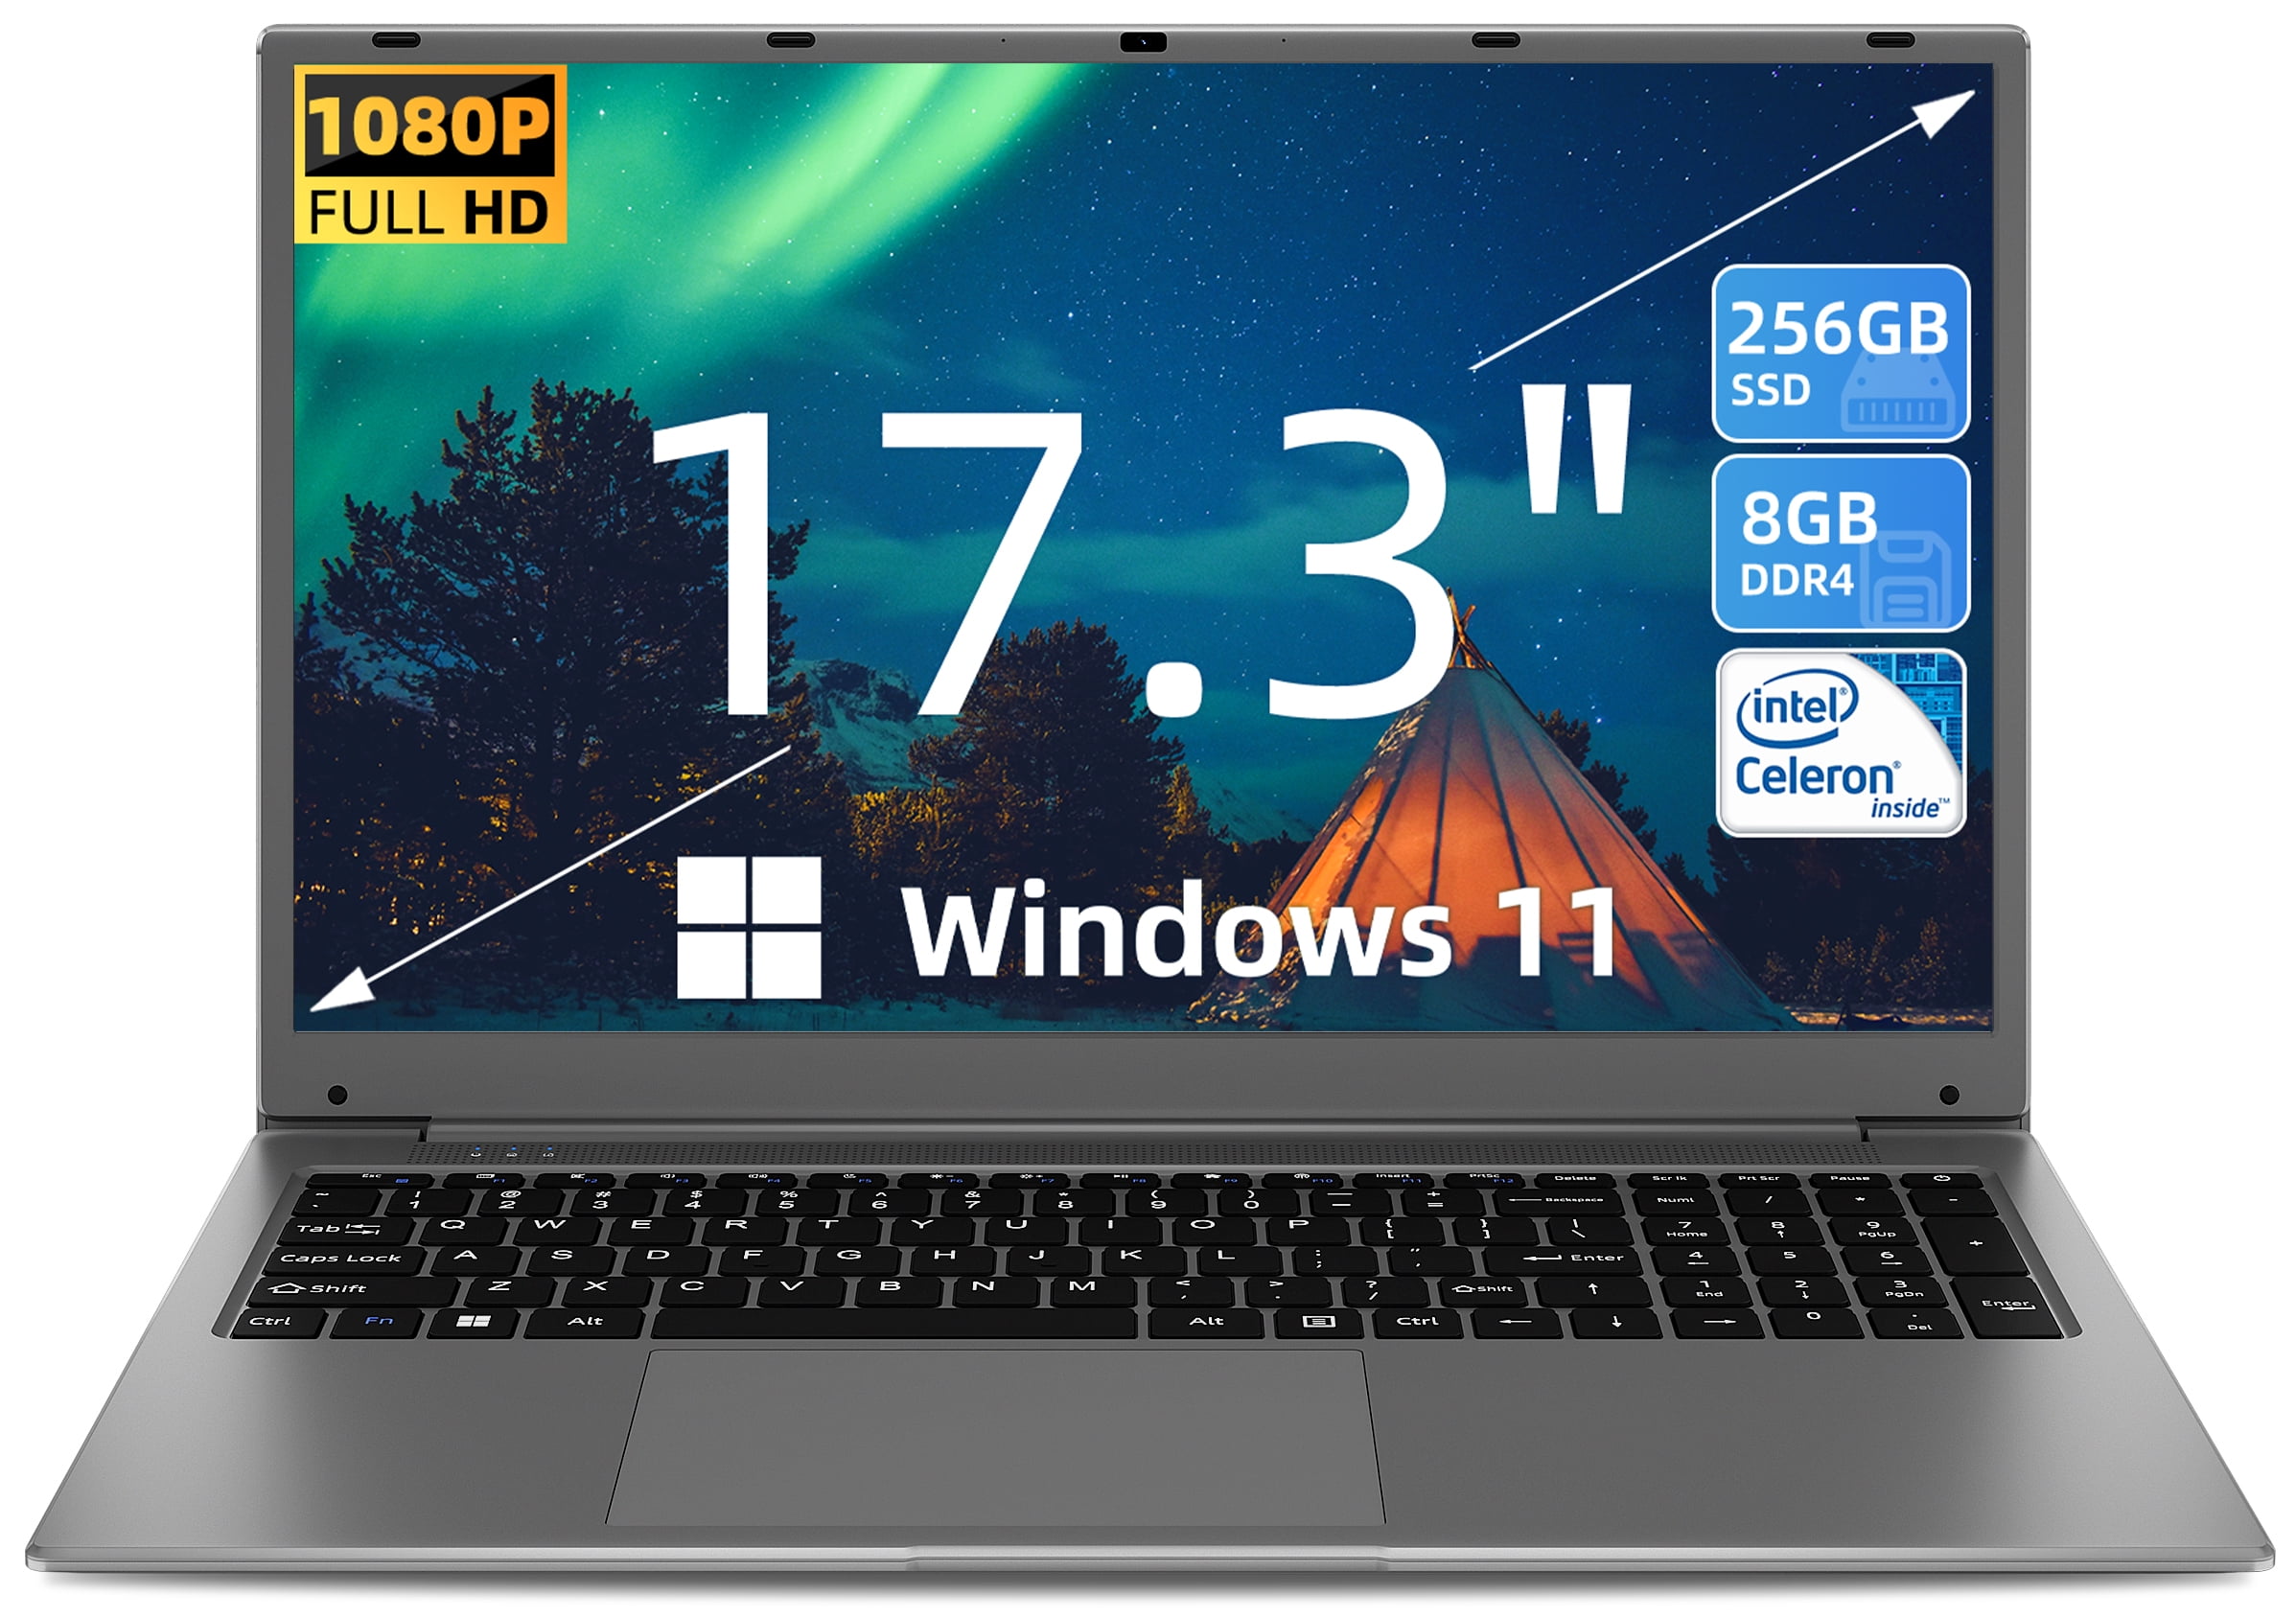 SGIN Laptop 15.6 Inch, 4GB DDR4 128GB SSD Laptops with Intel Celeron  N4020C(up to 2.8 GHz), Intel UHD Graphics 600, Mini HDMI, WiFi, Webcam,  USB3.0